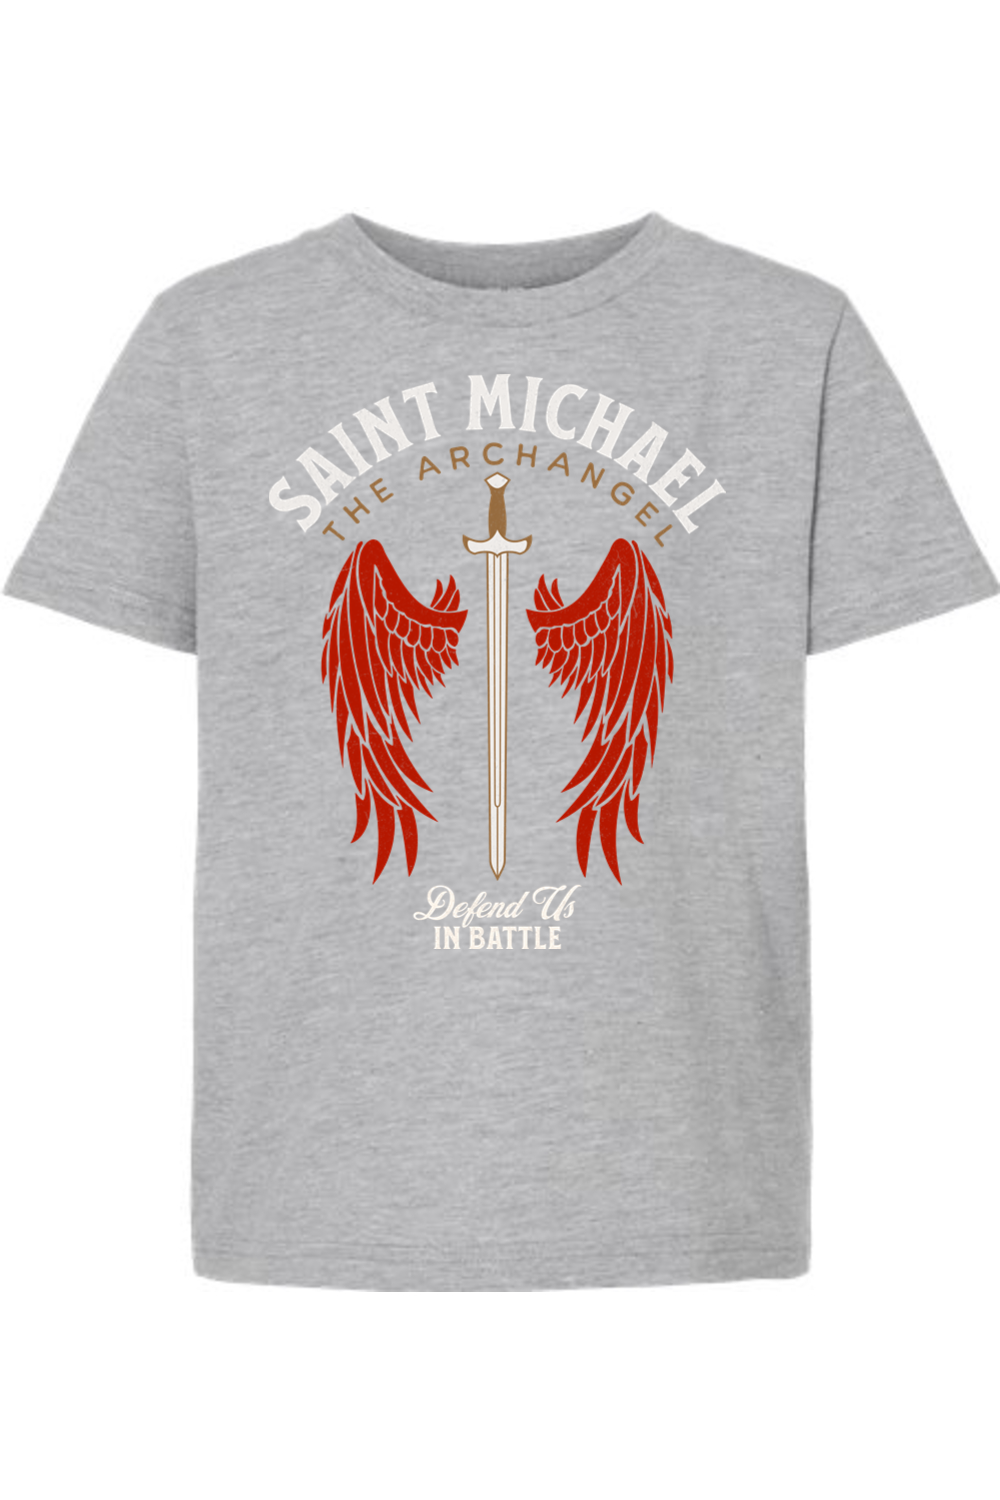 St. Michael - Defend Us in Battle Kids T-Shirt